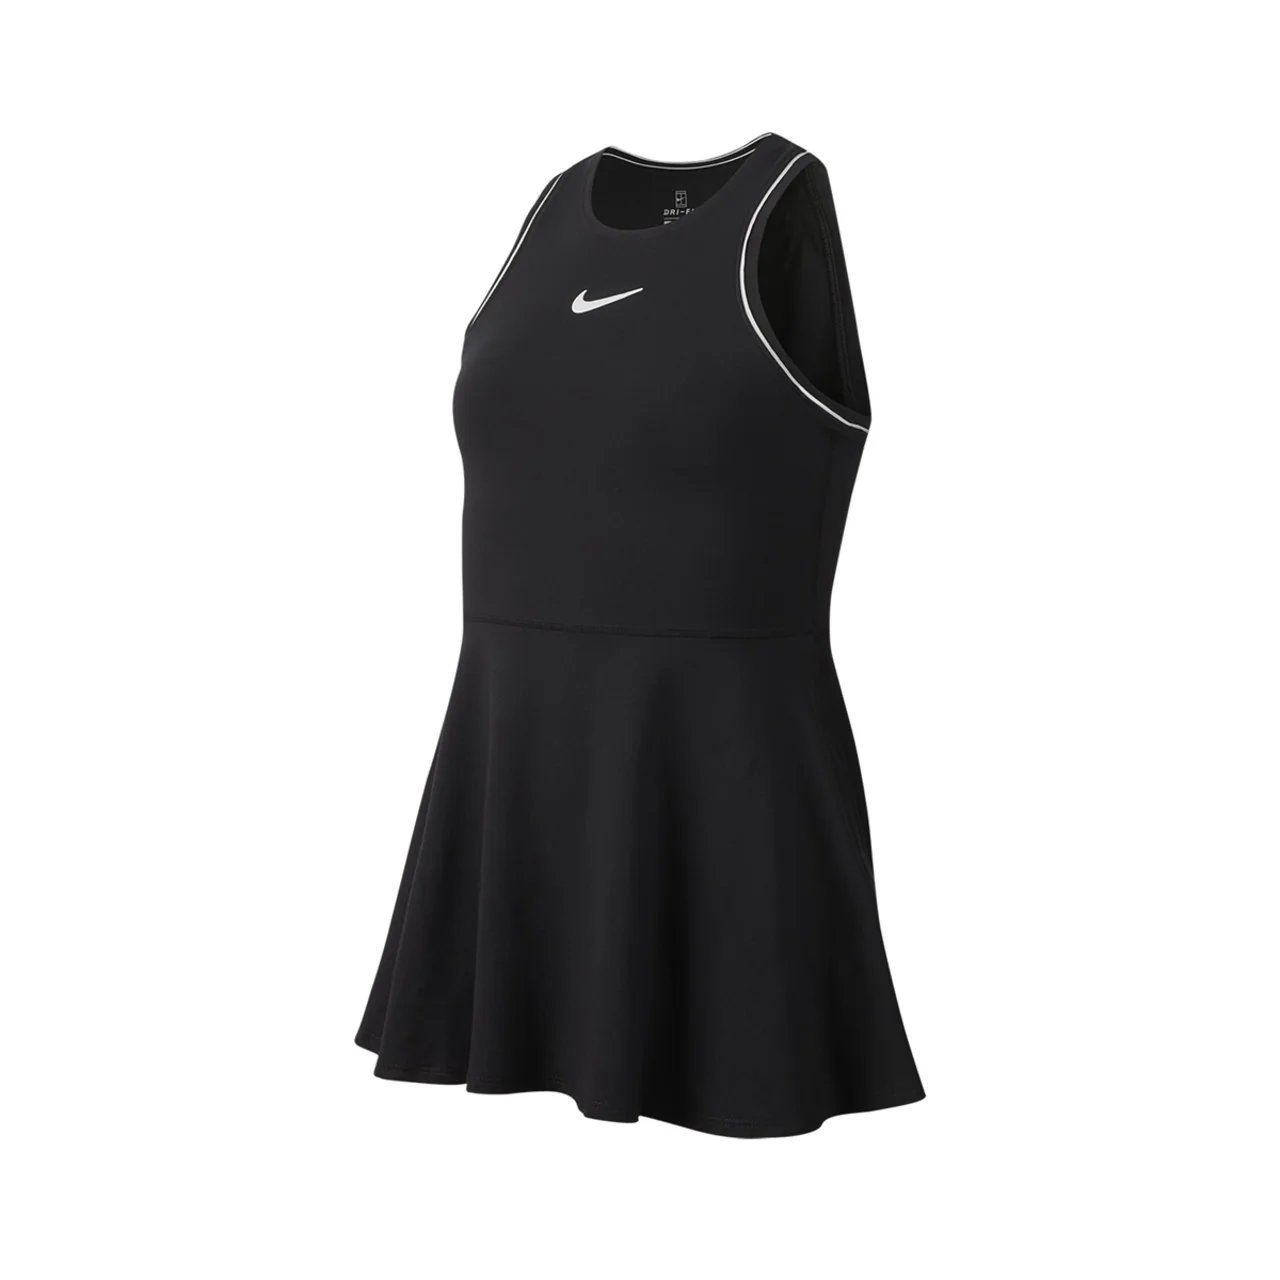 Nike Dry Dress Black/White